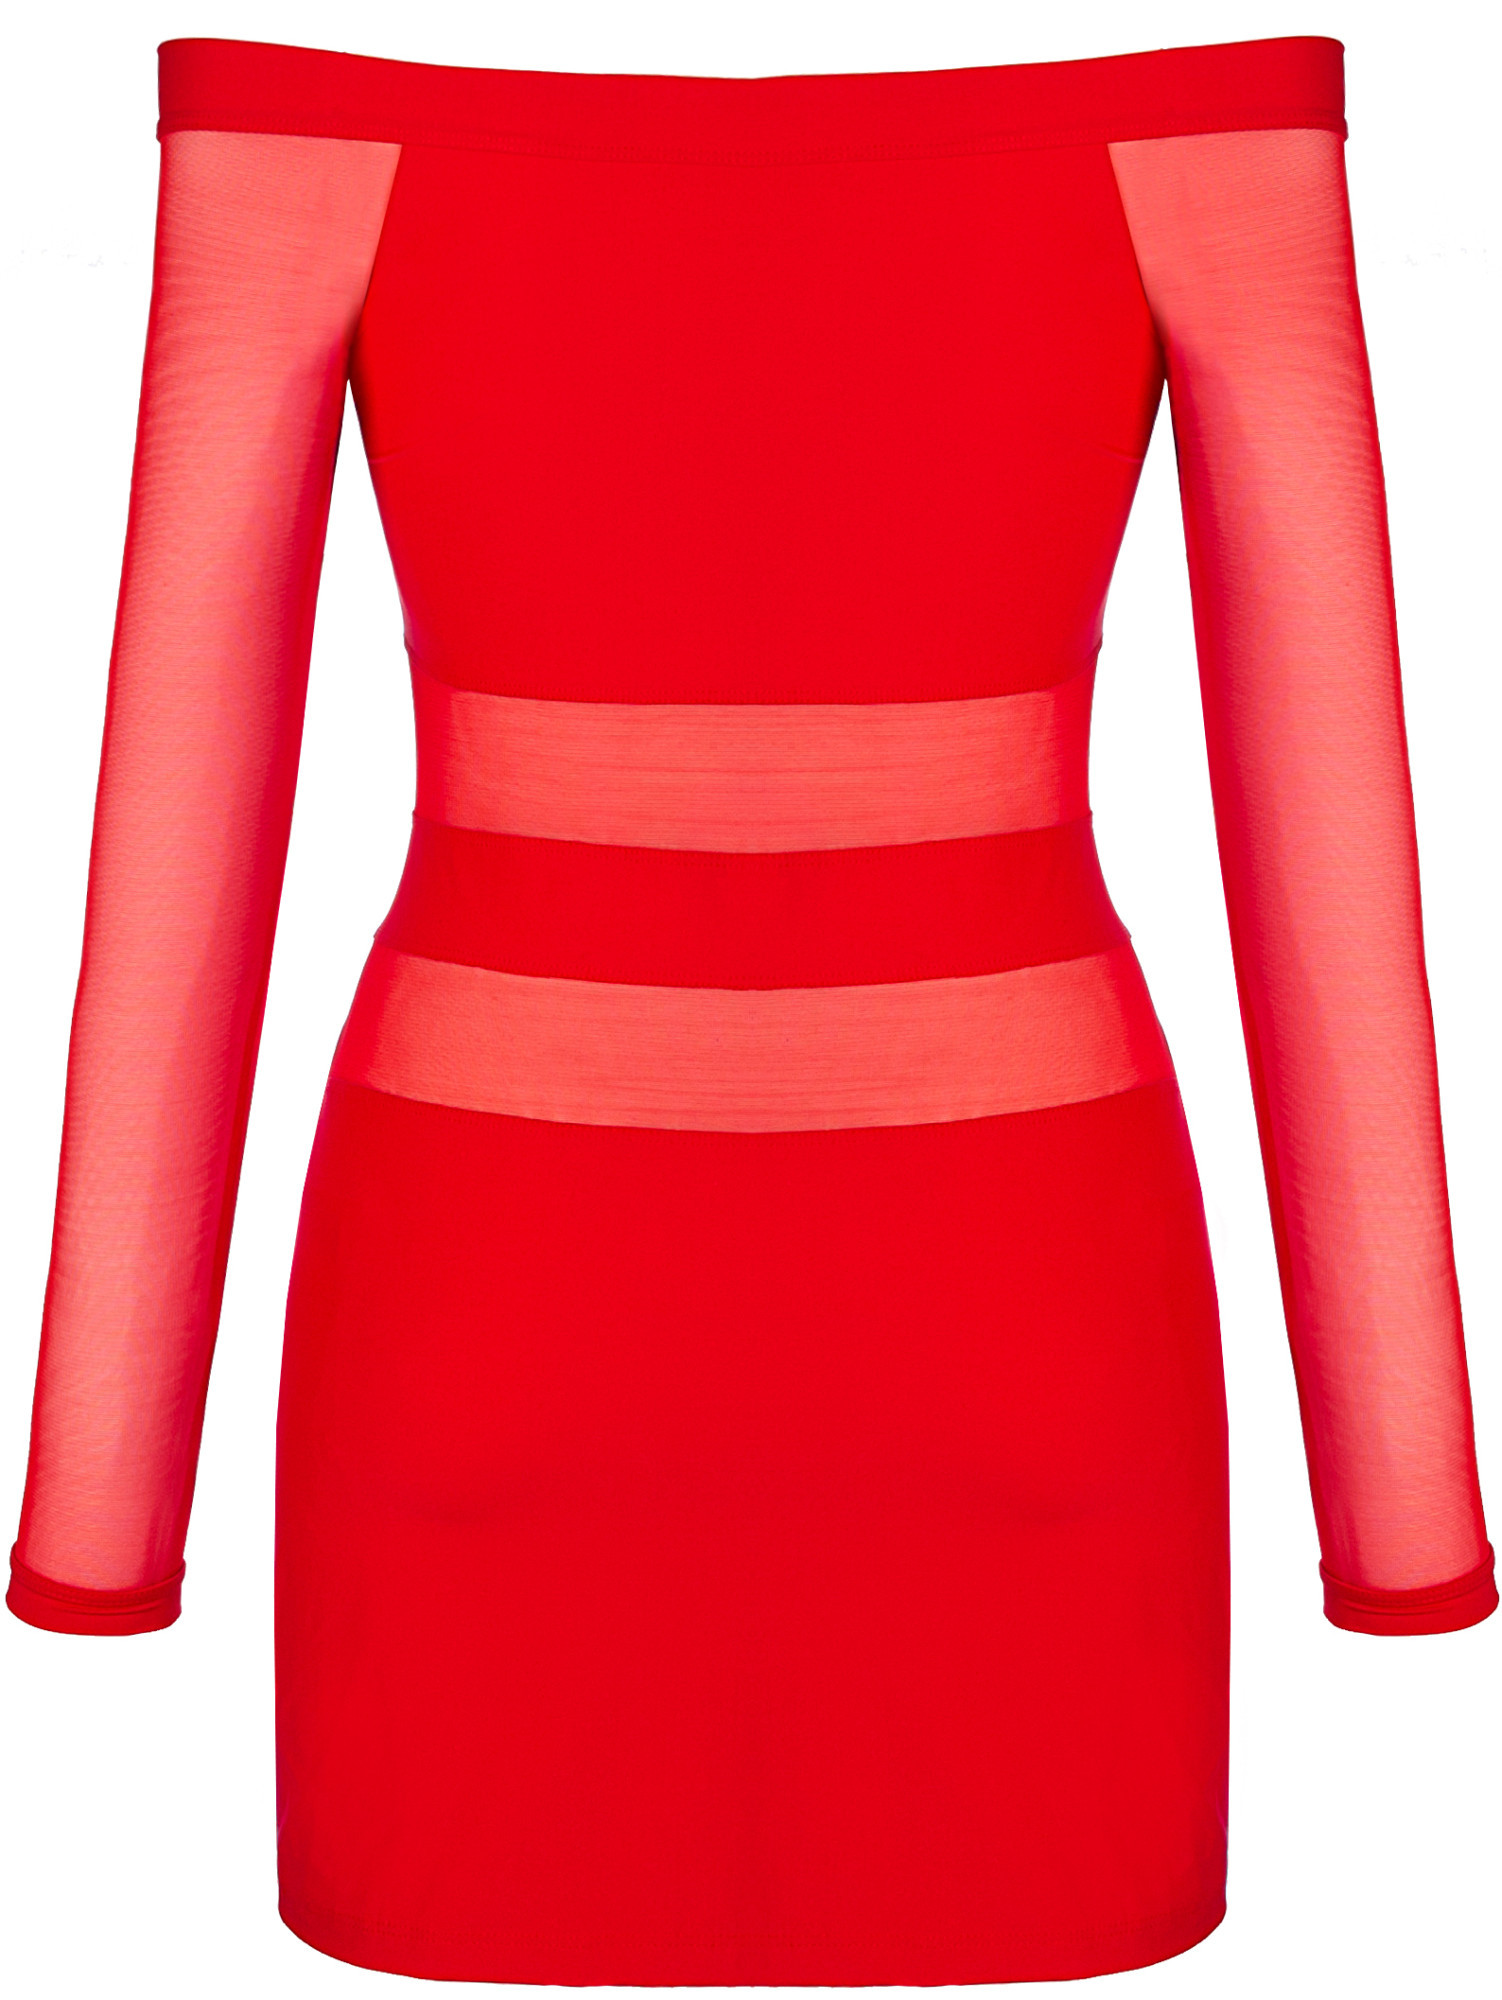 Šaty model 17681502 červené S - Axami